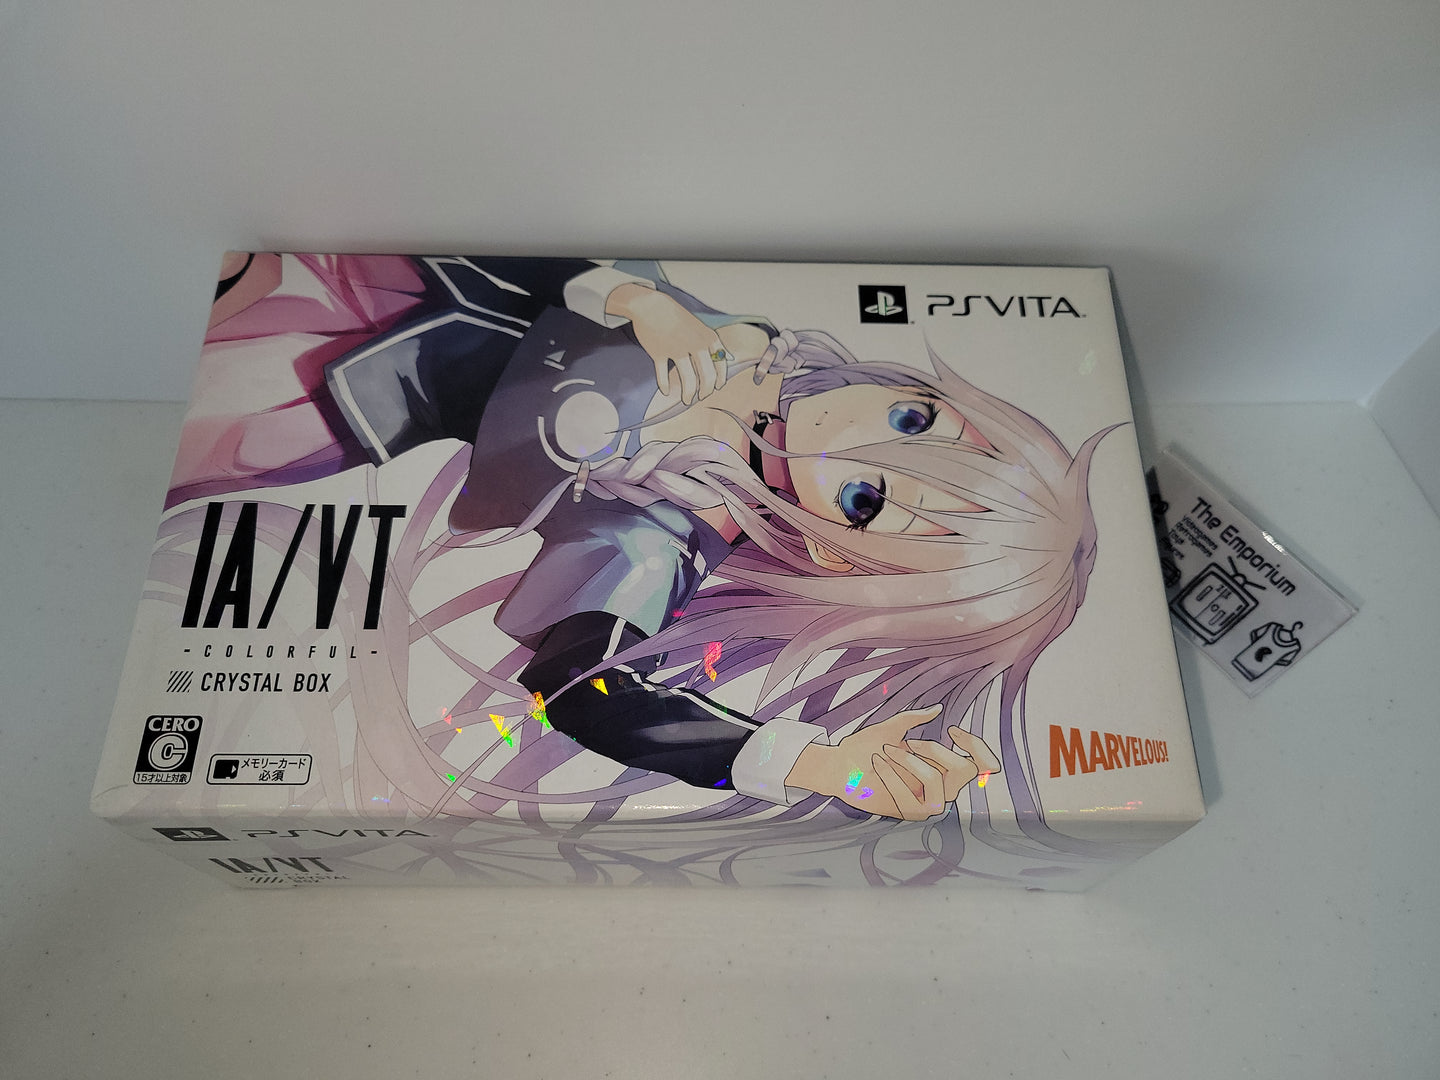 IA/VT COLORFUL Crystal BOX - Sony PSV Playstation Vita